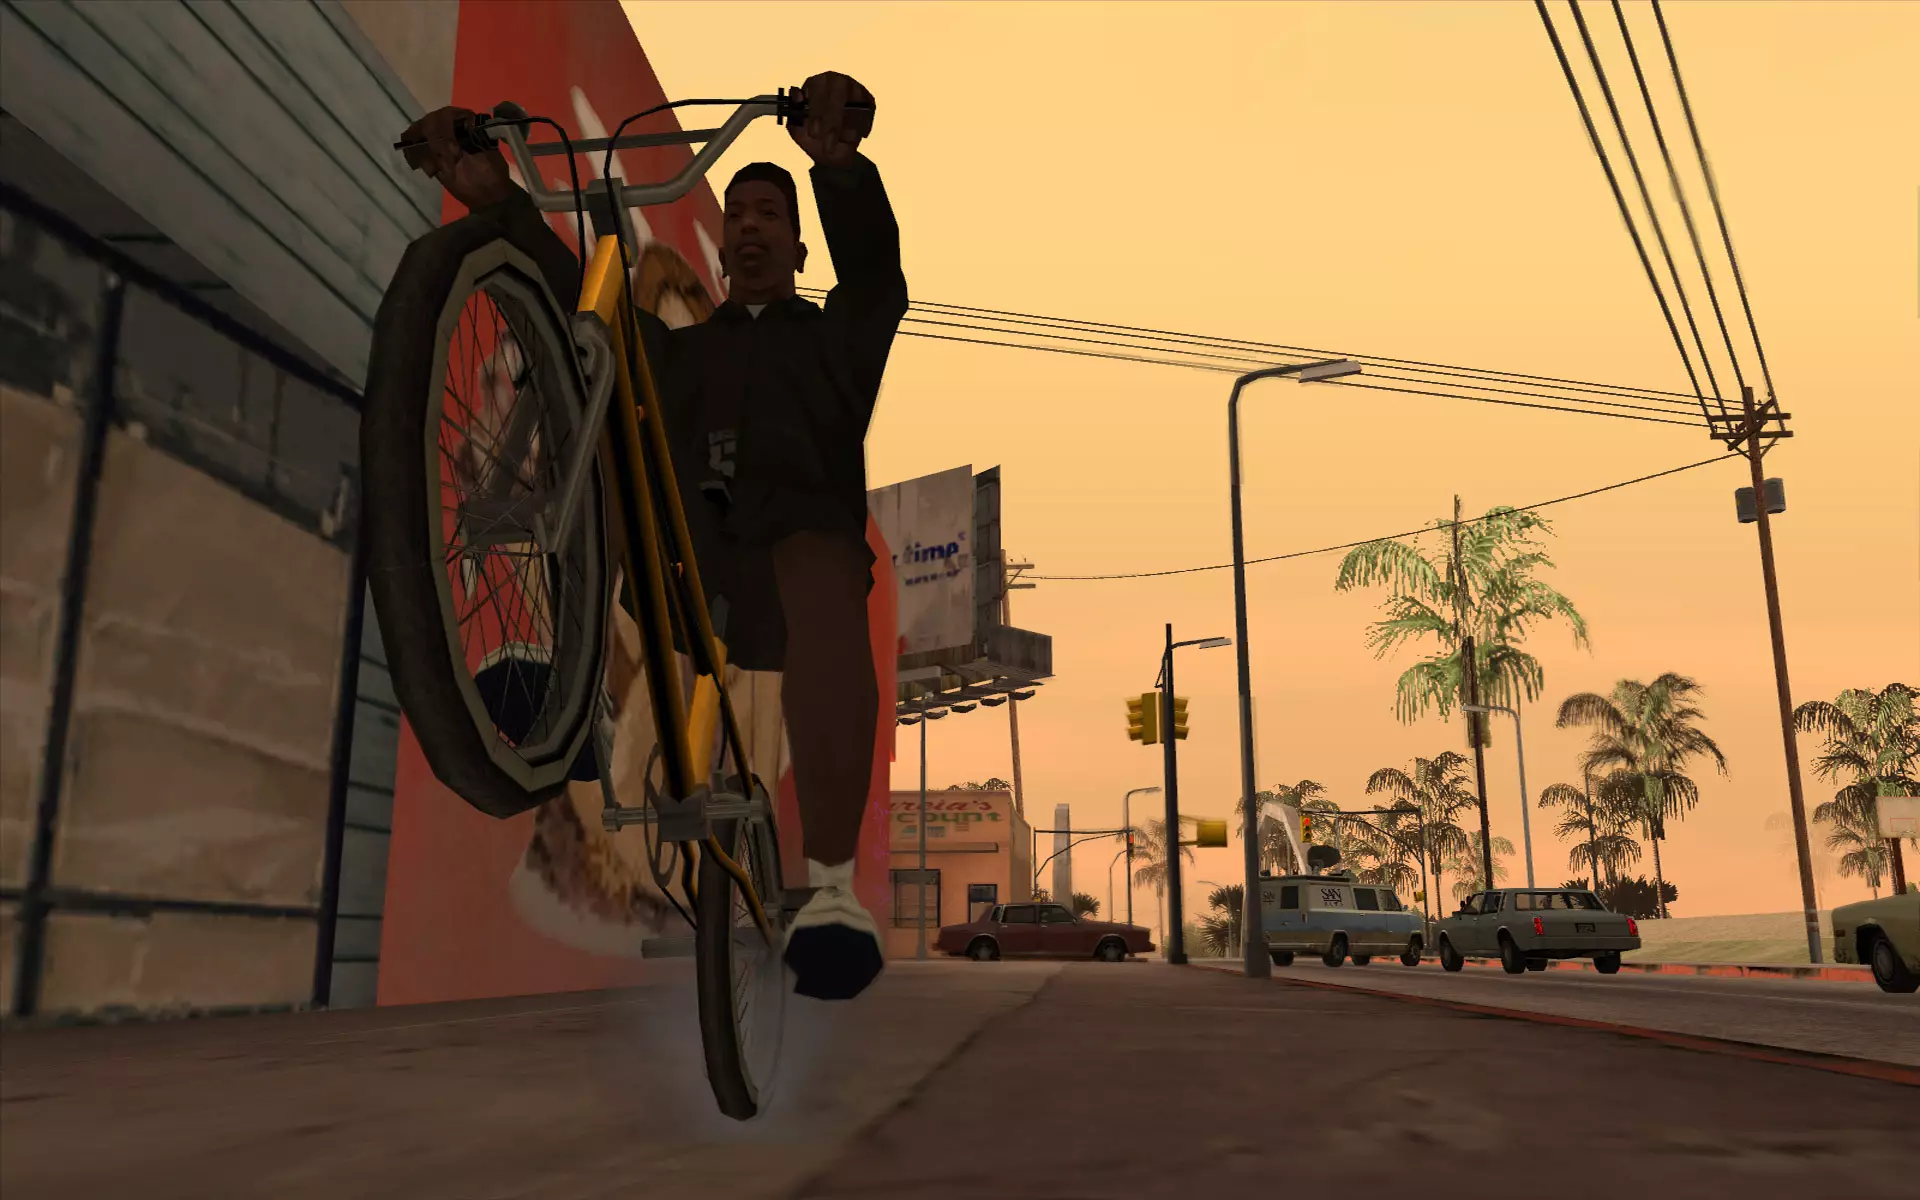 Grand Theft Auto: San Andreas /